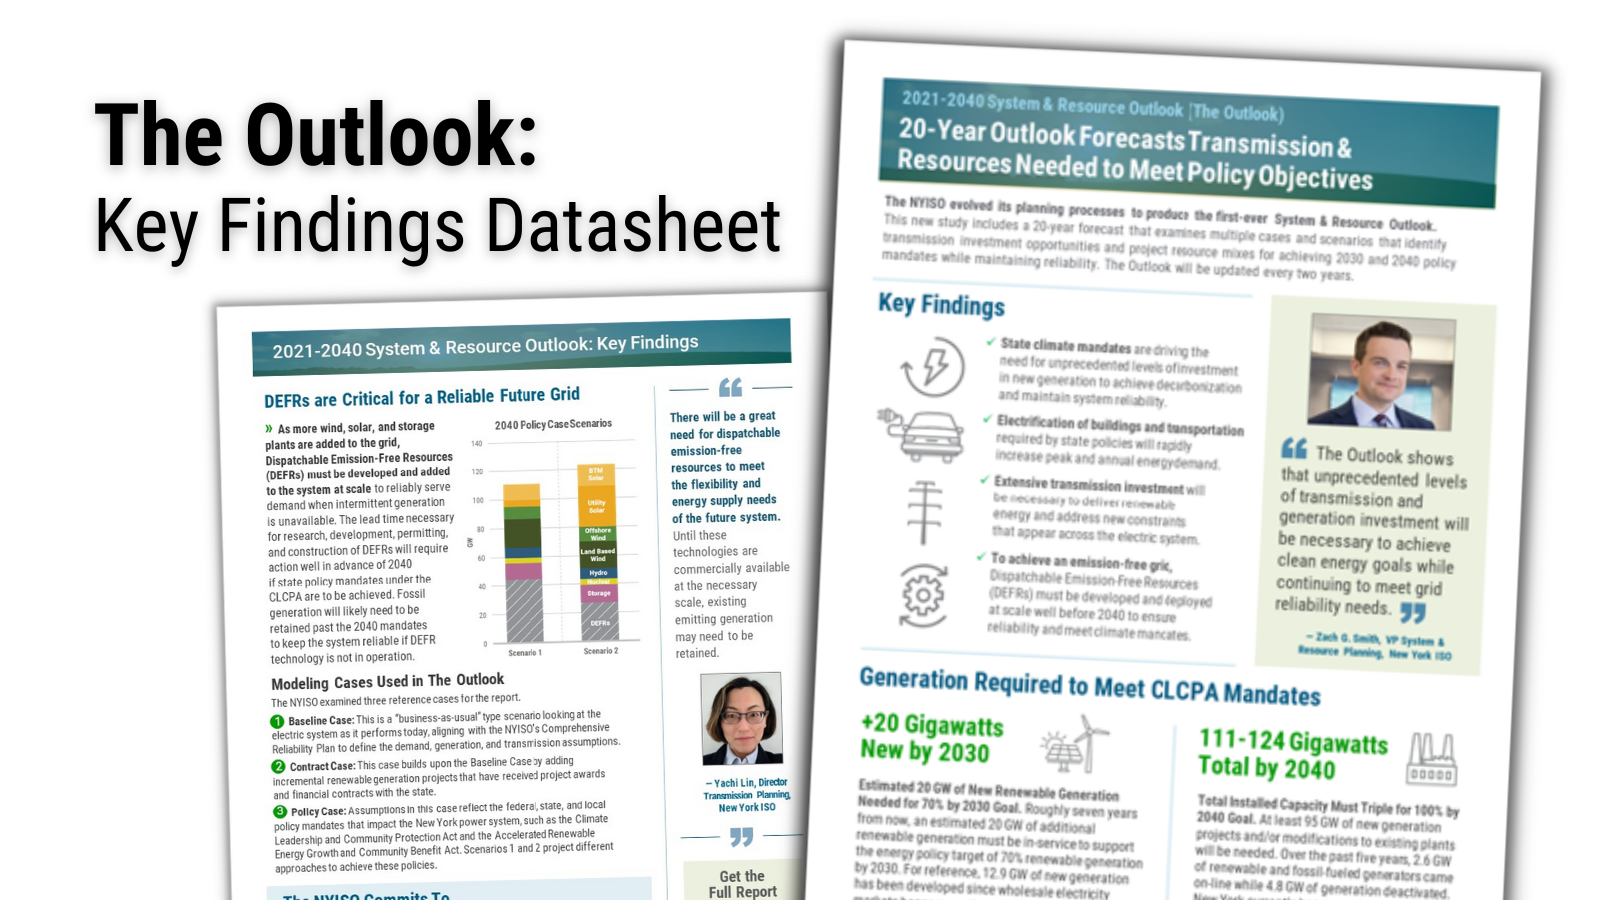 The Outlook: Key Findings Datasheet